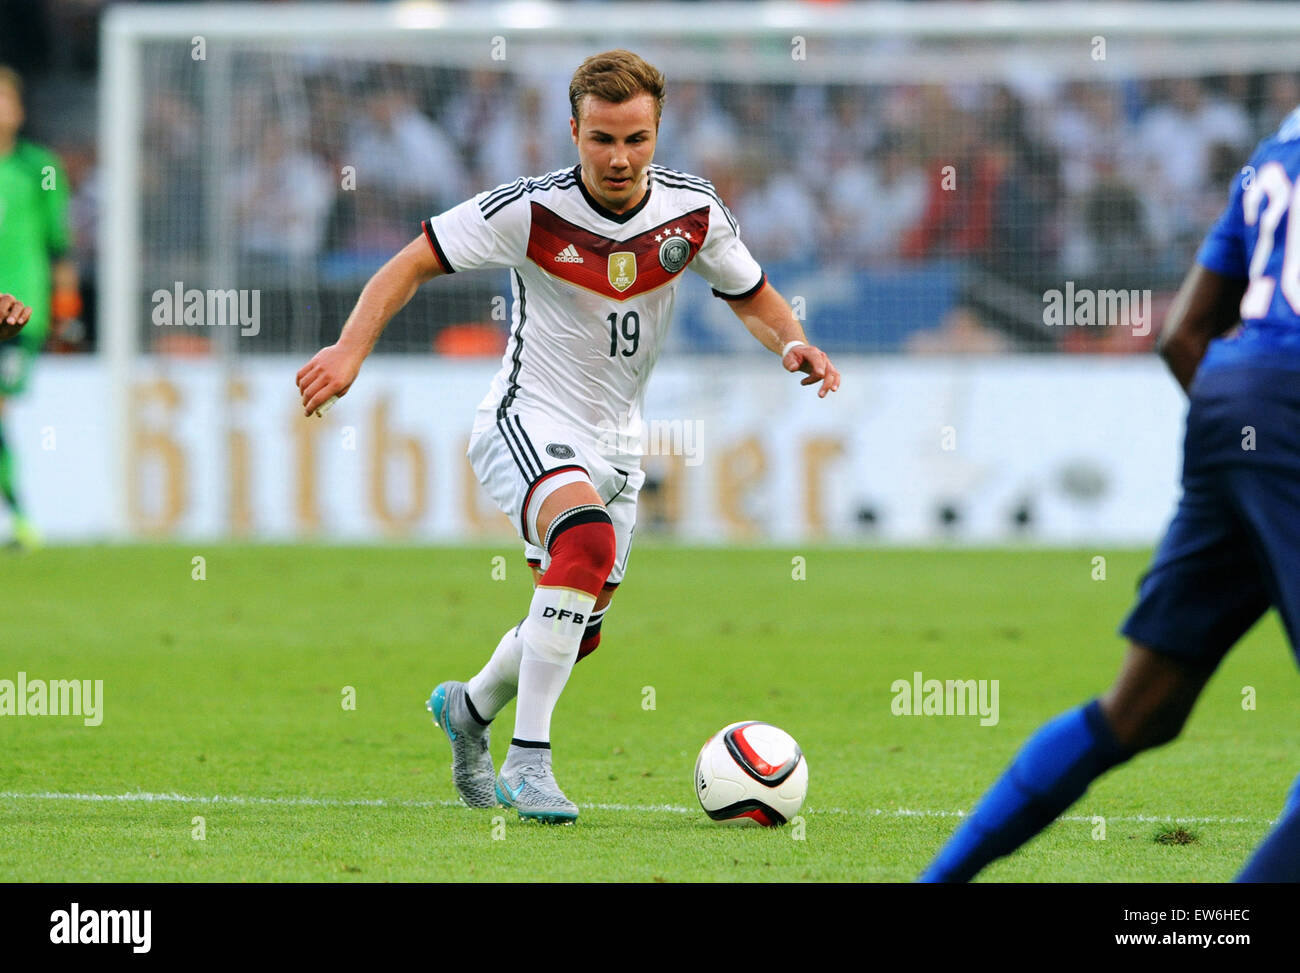 Friendlymatch at Rhein Energie Stadion Cologne: Germany vs USA: Mario Goetze (GER) Stock Photo